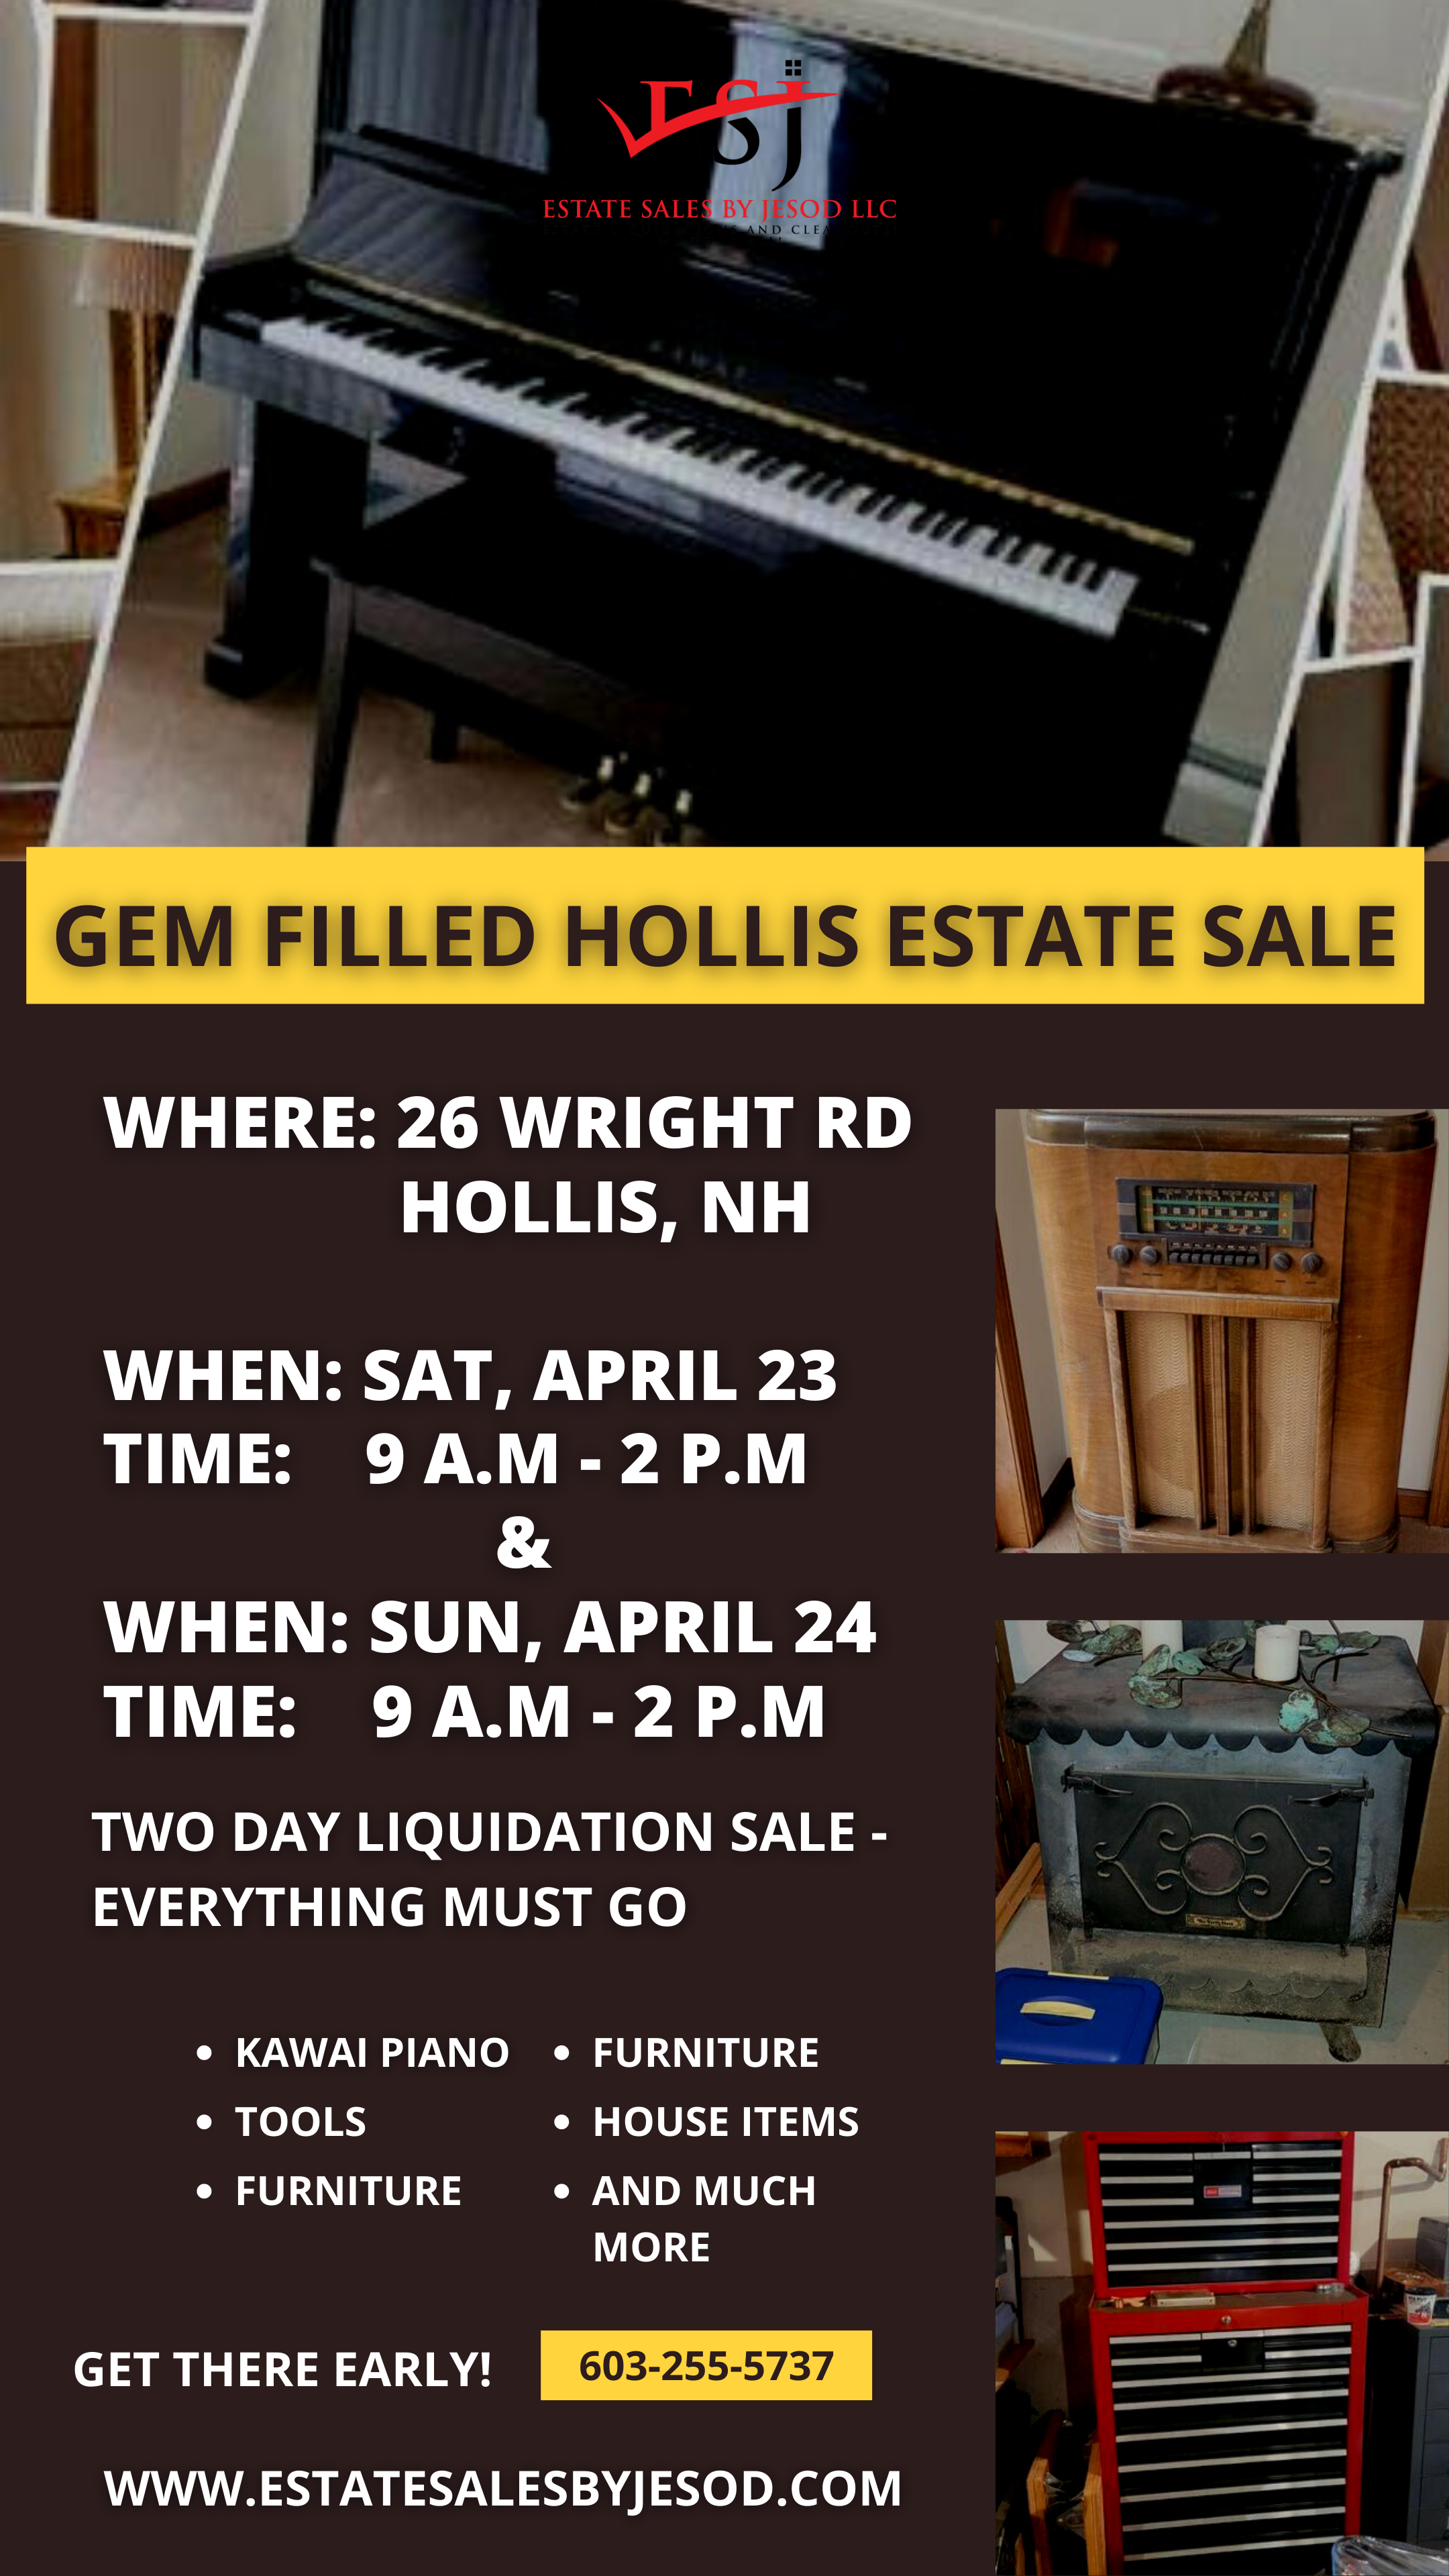 Upcoming Sale in Hollis, NH -April 23 & 24, 2022